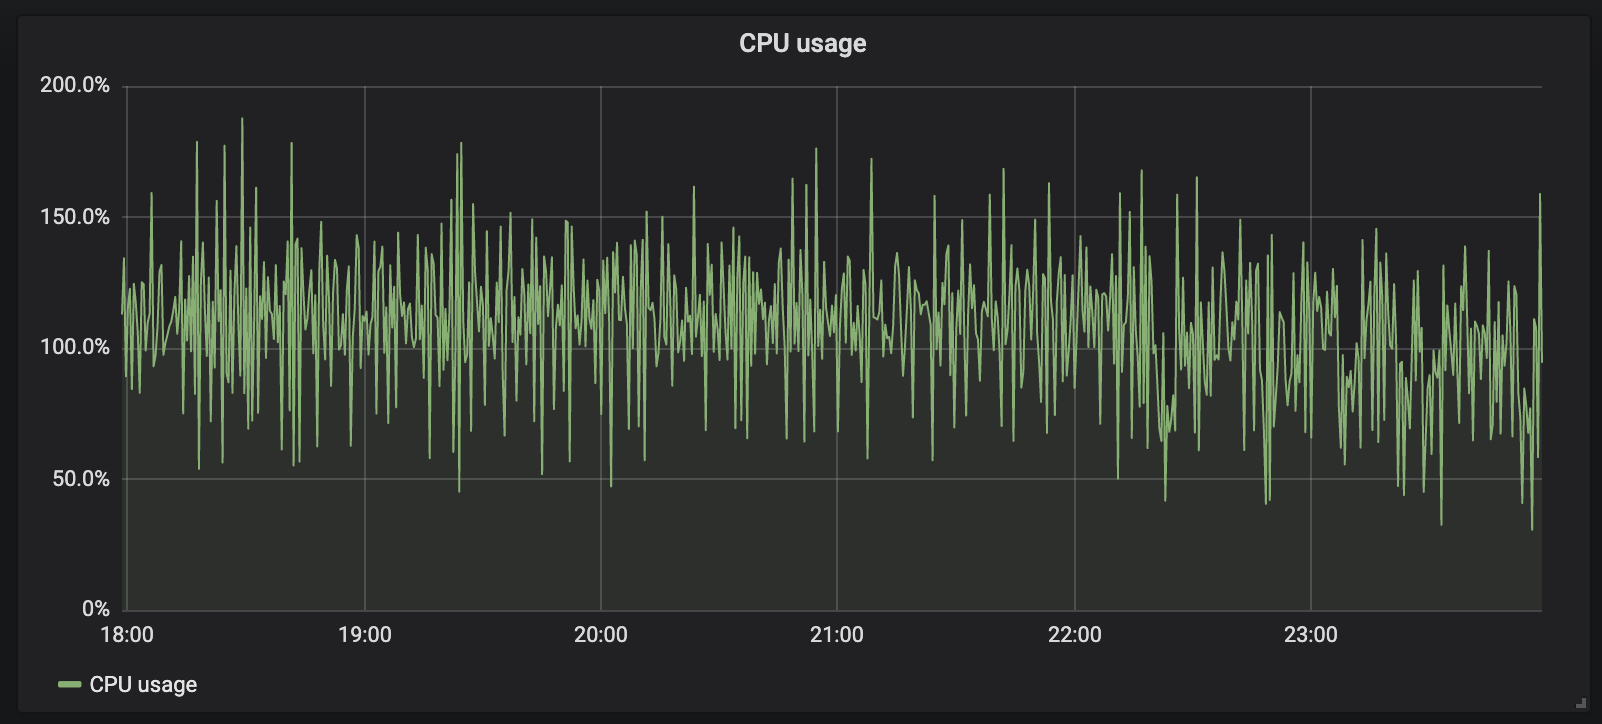 cpu usage graph